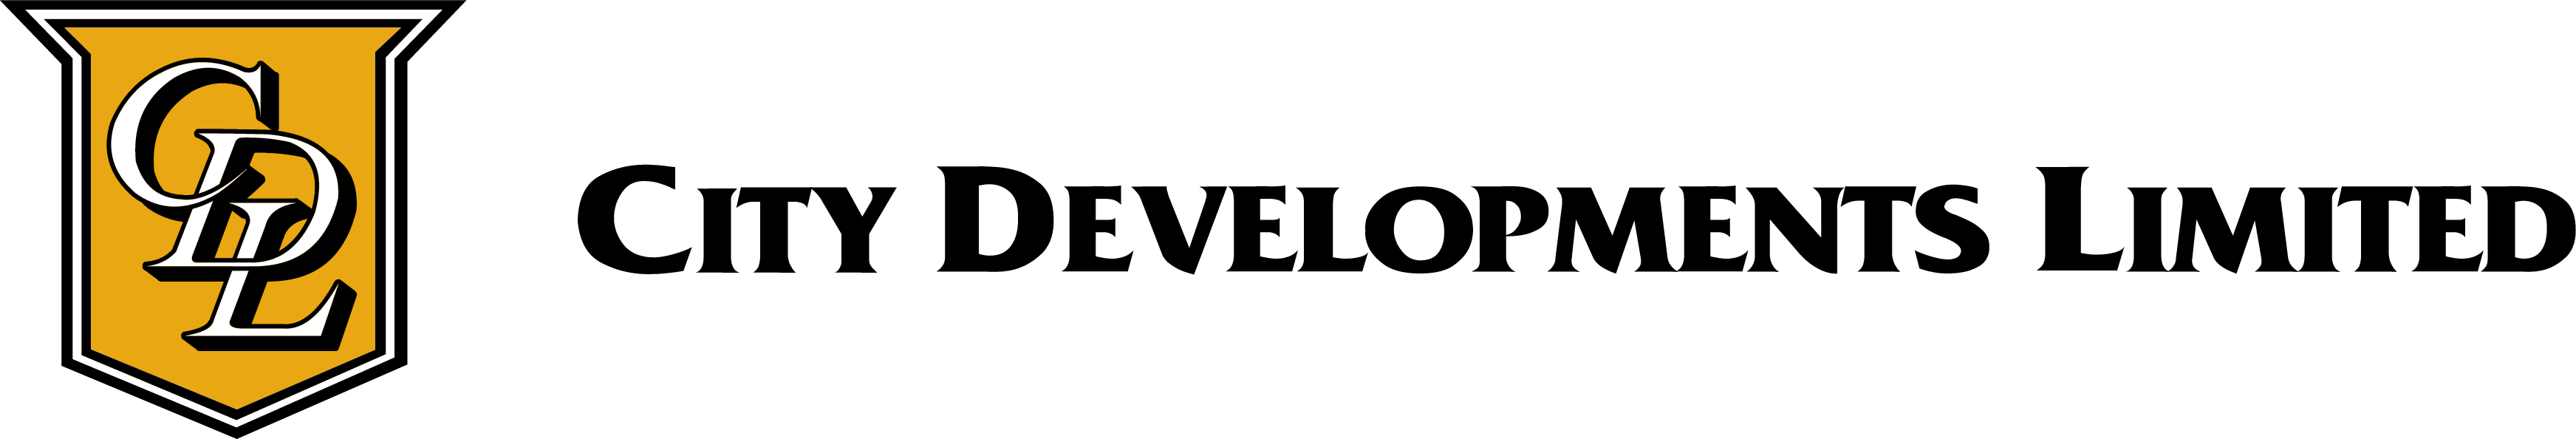 CDL Logo